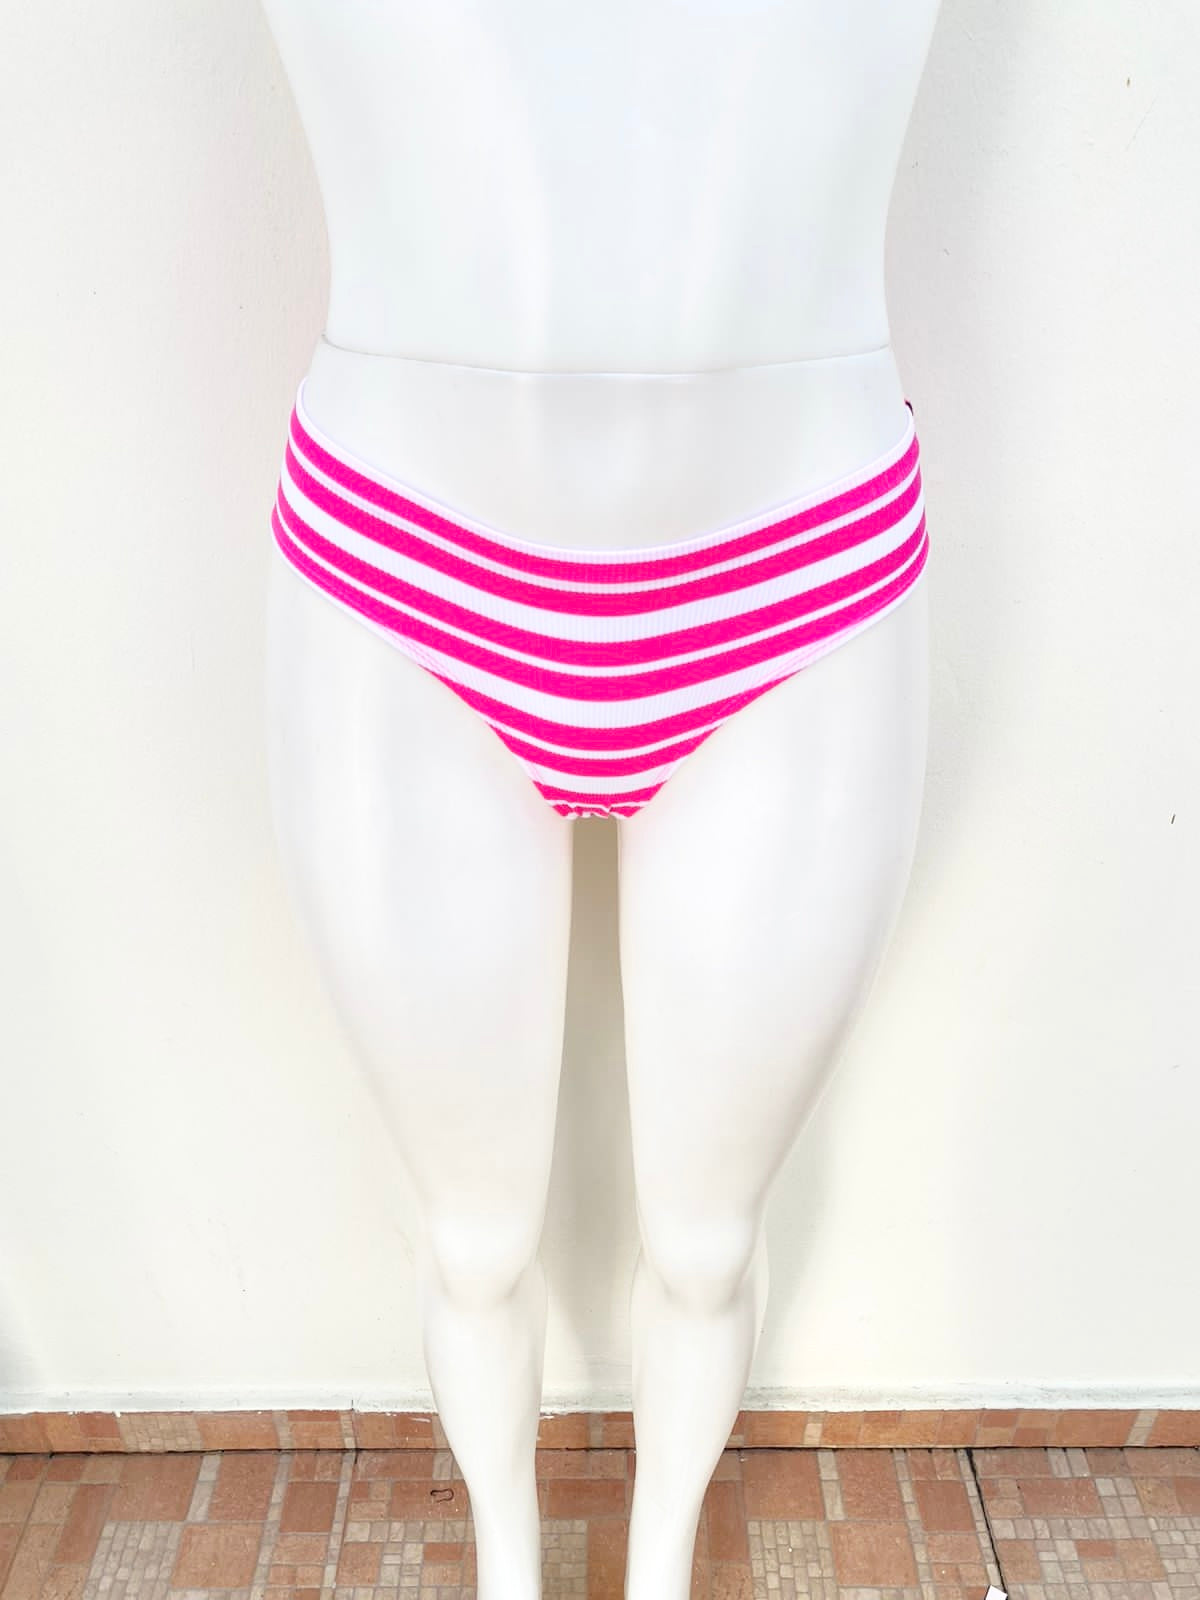 Panti PINK Victoria’s Secret Original, lineas blanco y rosa.